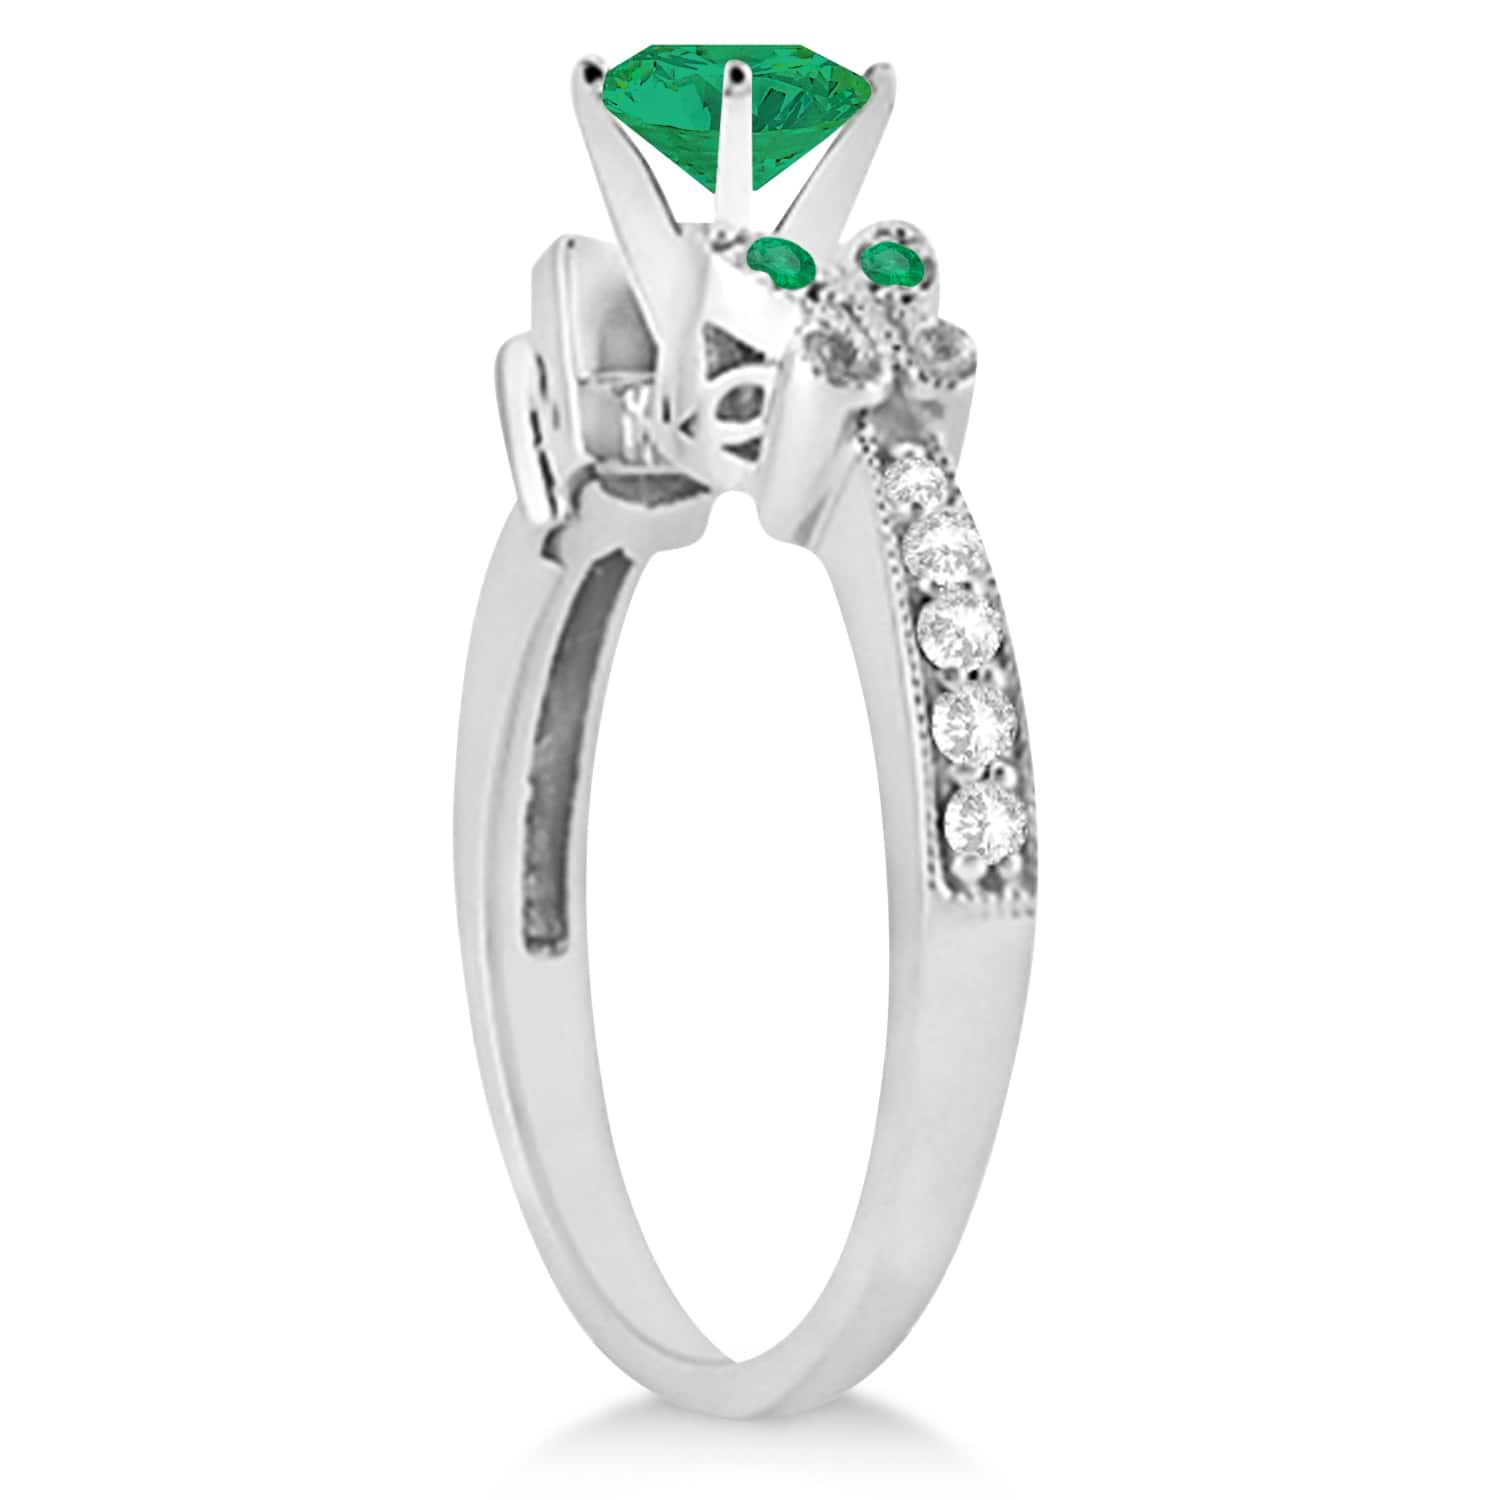 Butterfly Genuine Emerald & Diamond Bridal Set Palladium (2.13ct)